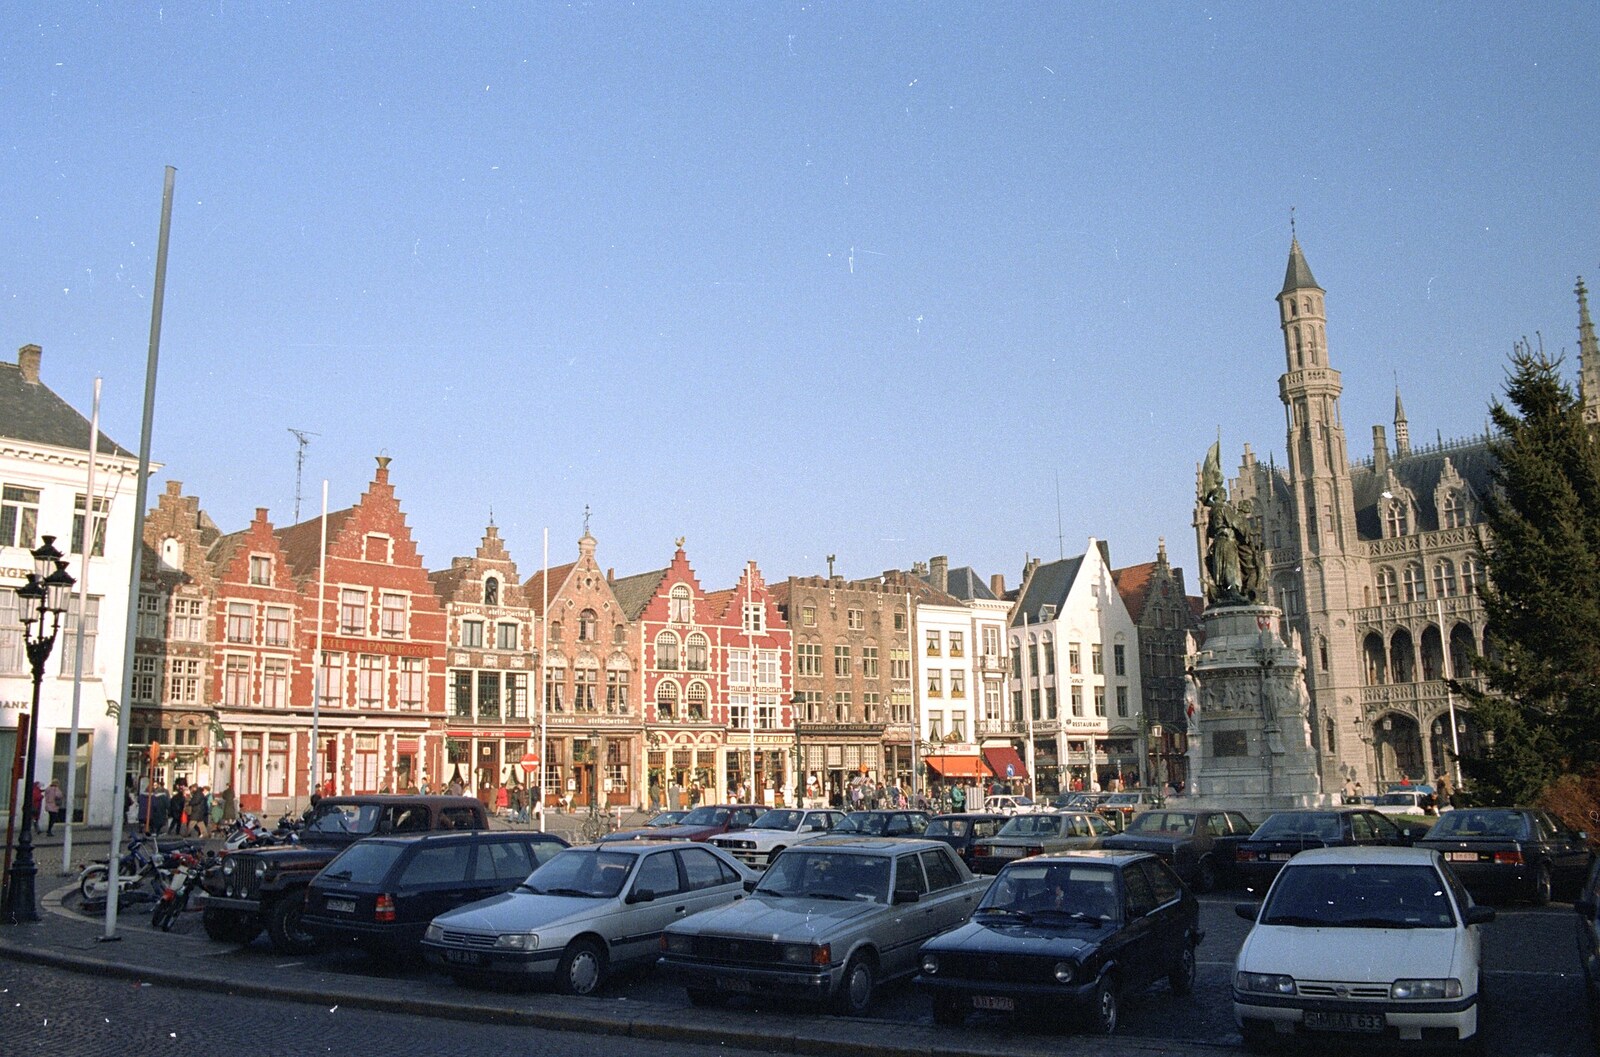 Bruges square from Clays Does Bruges, Belgium - 19th December 1992